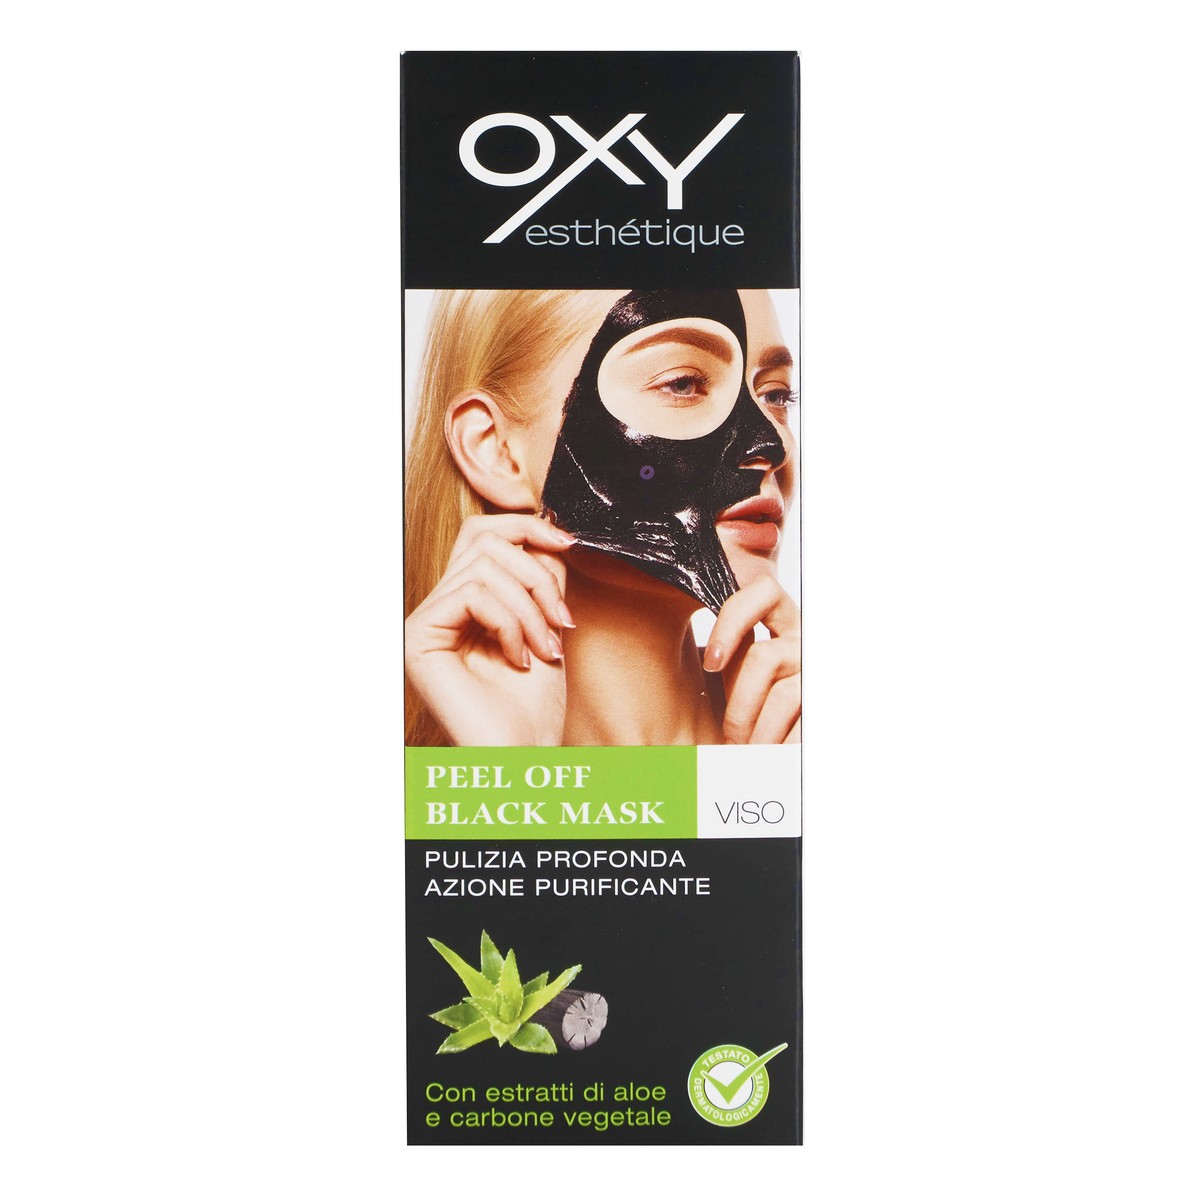 Oxy Esthétique Peel Off Black Mask Viso